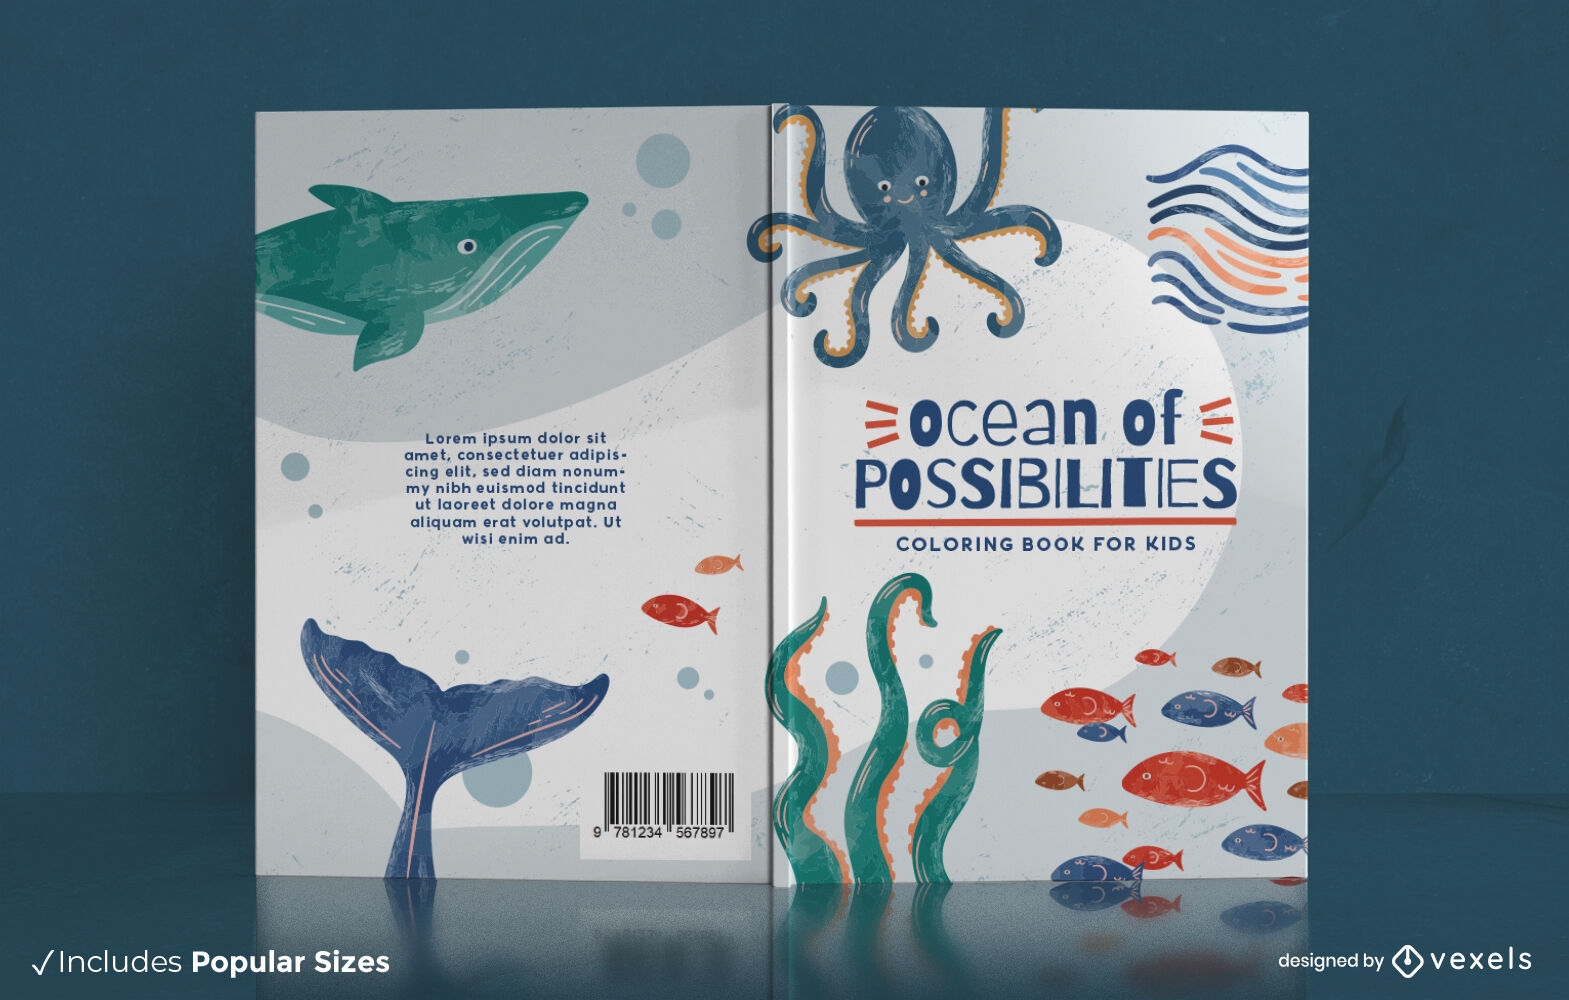 Oceano de possibilidades design de capa de livro para colorir